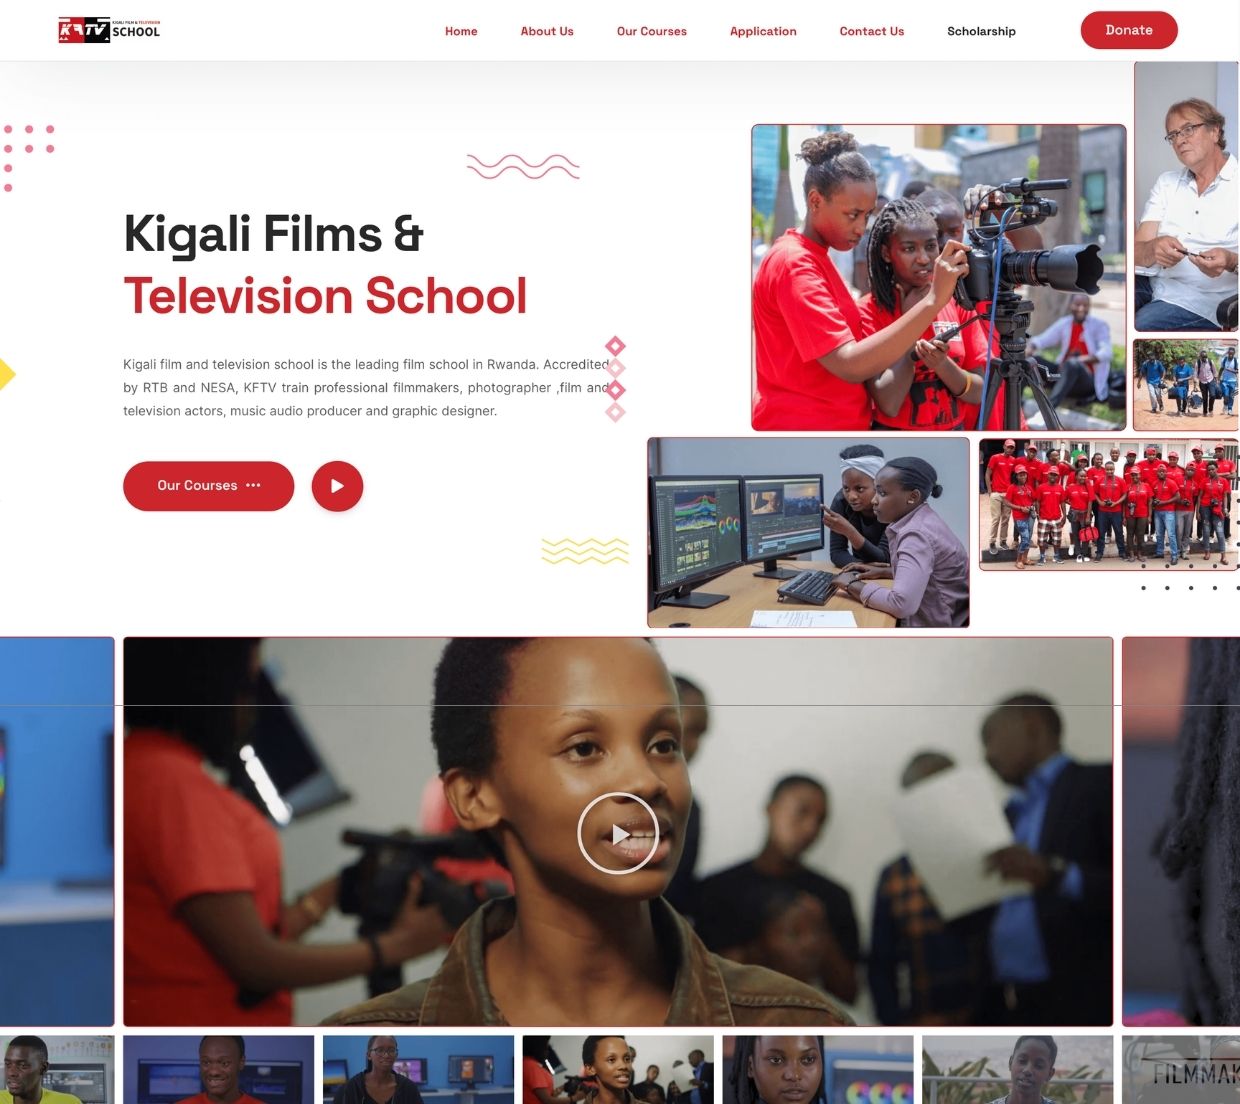 Kigali Films & Television School